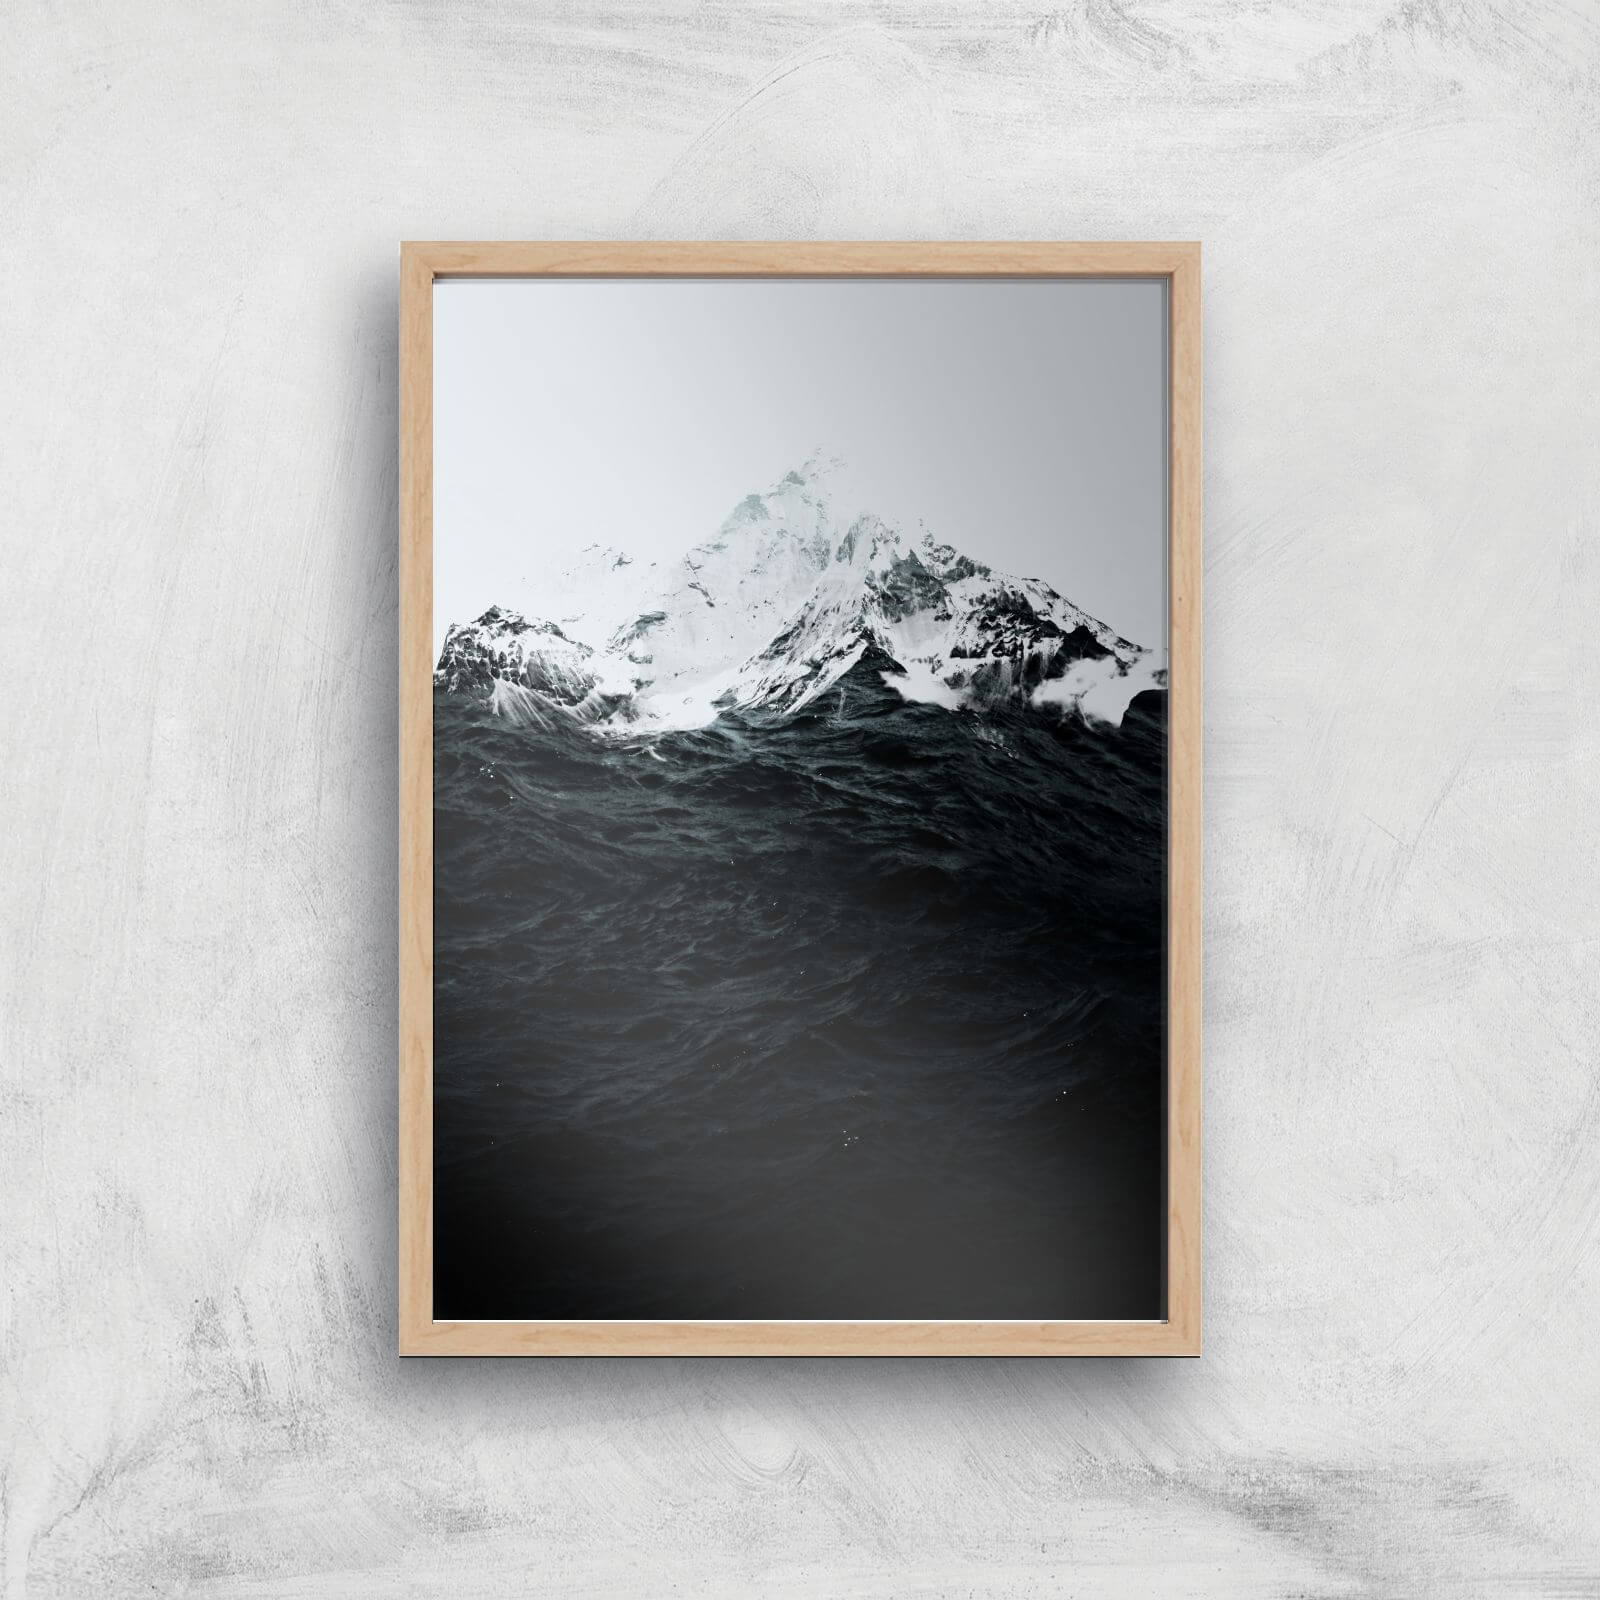 Those Waves Were Like Mountains Giclee Art Print - A4 - Wooden Frame